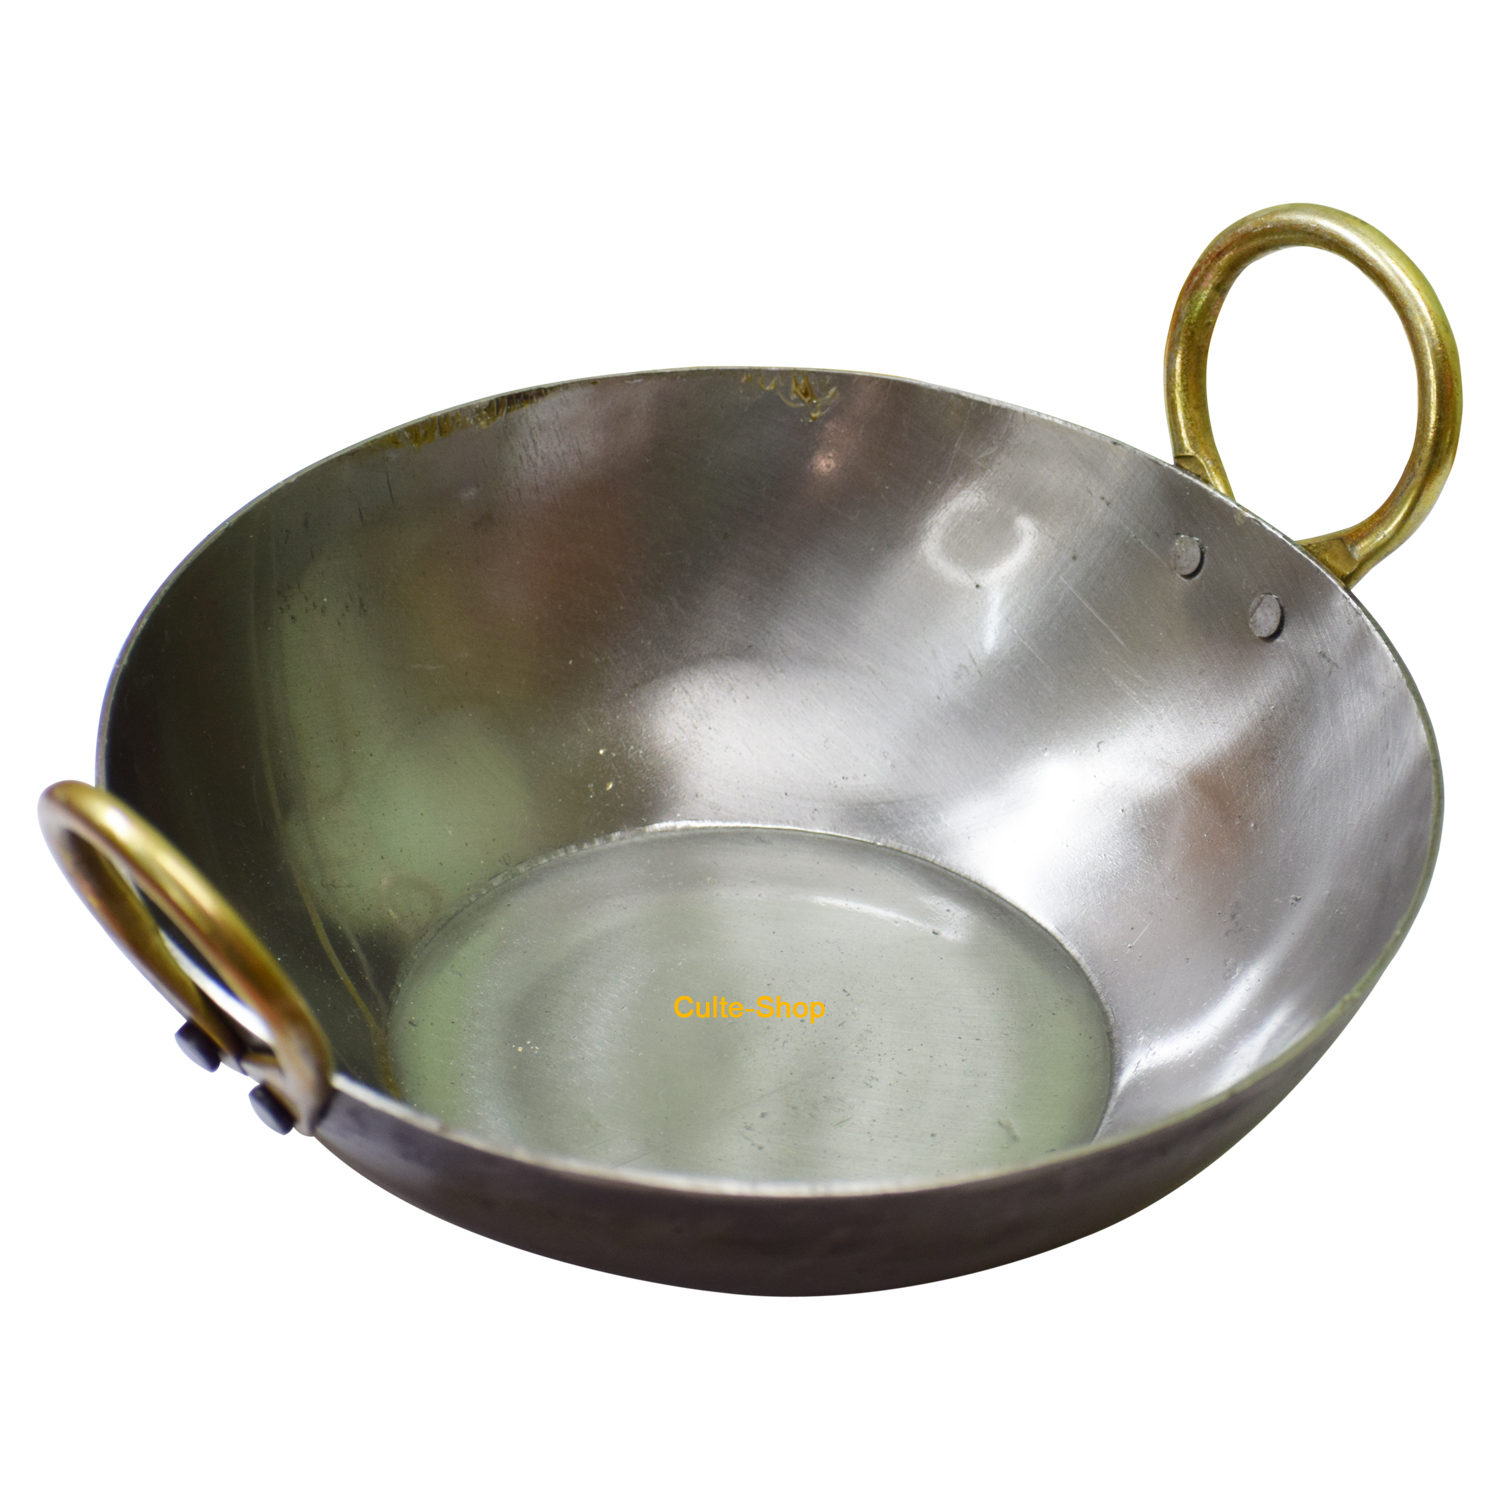 Silver Iron Kadai For Cooking Induction Base Medium Size: 1500ml